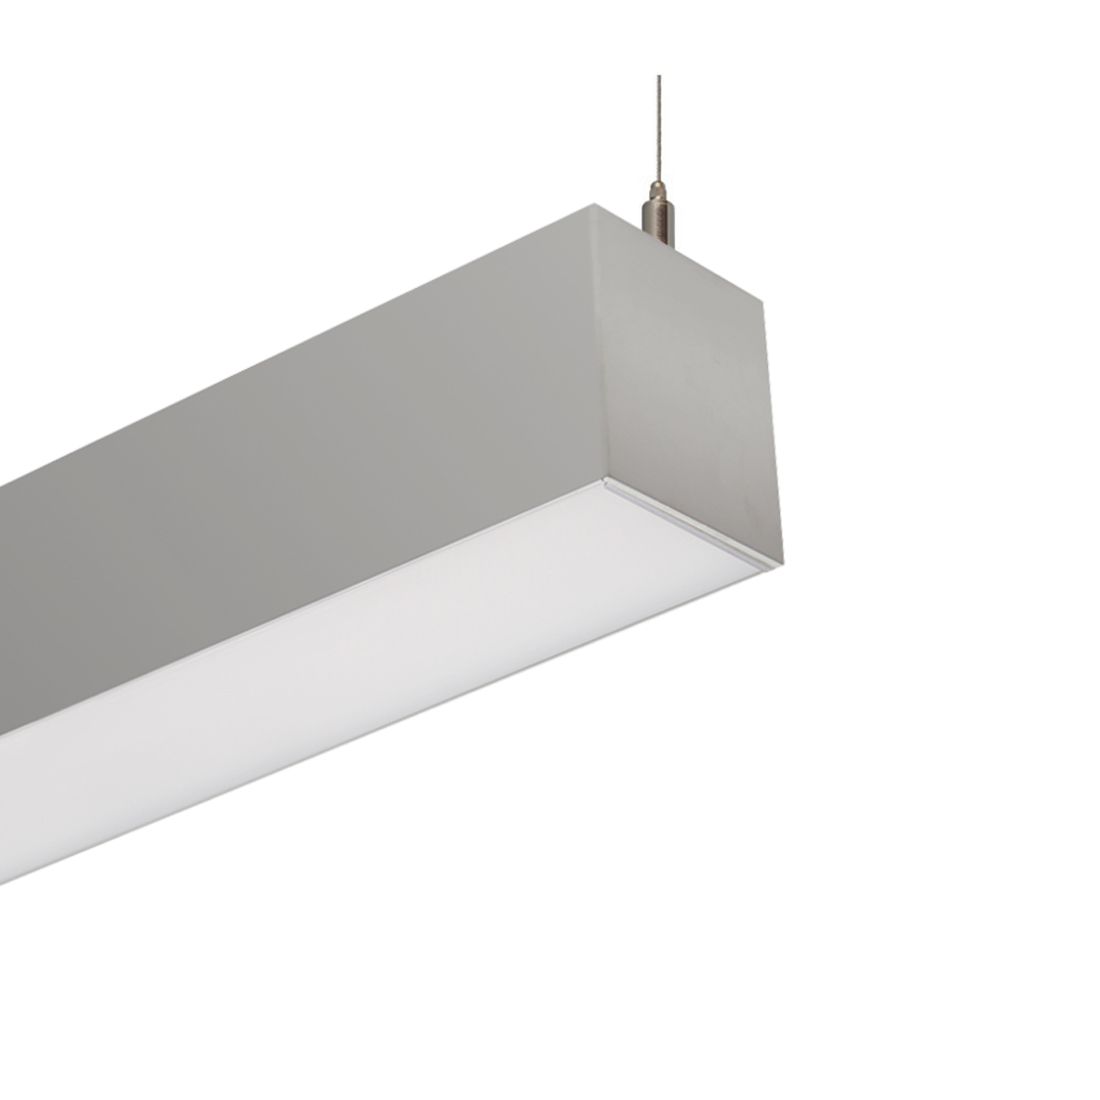 Alcon Lighting 12100 33 P Continuum 33 Architectural Led Linear Pendant Direct Light Fixture Alconlighting Com